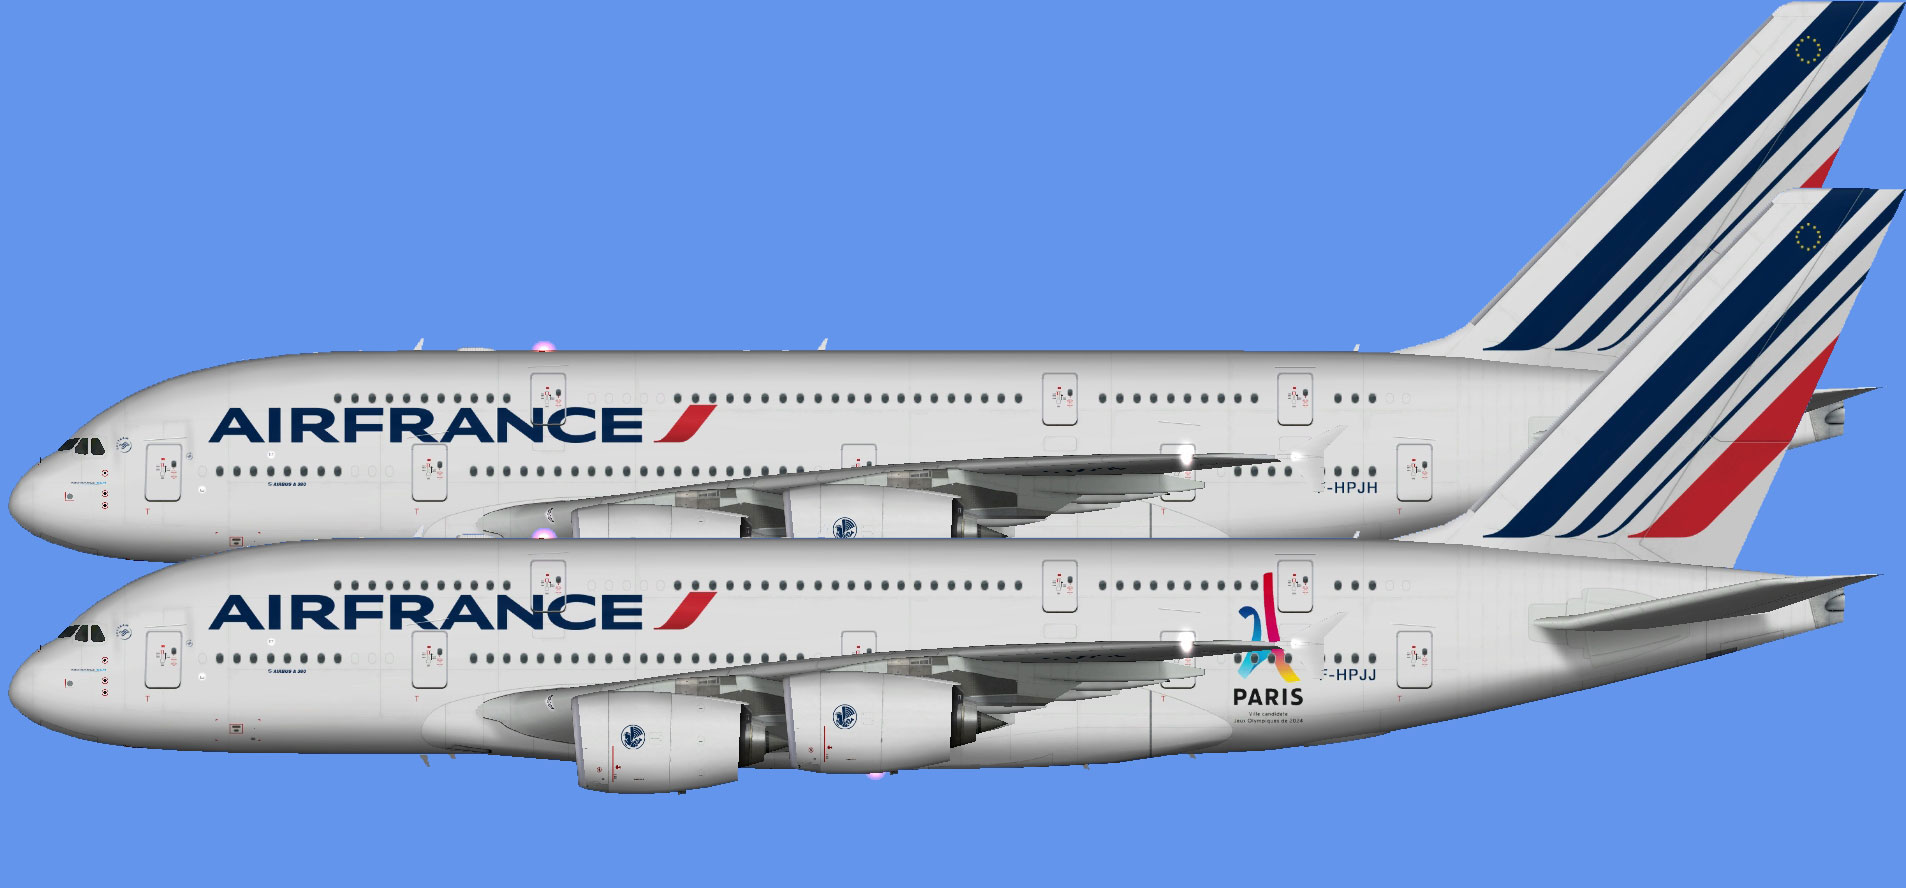 Air France A380 fleet (FSP)